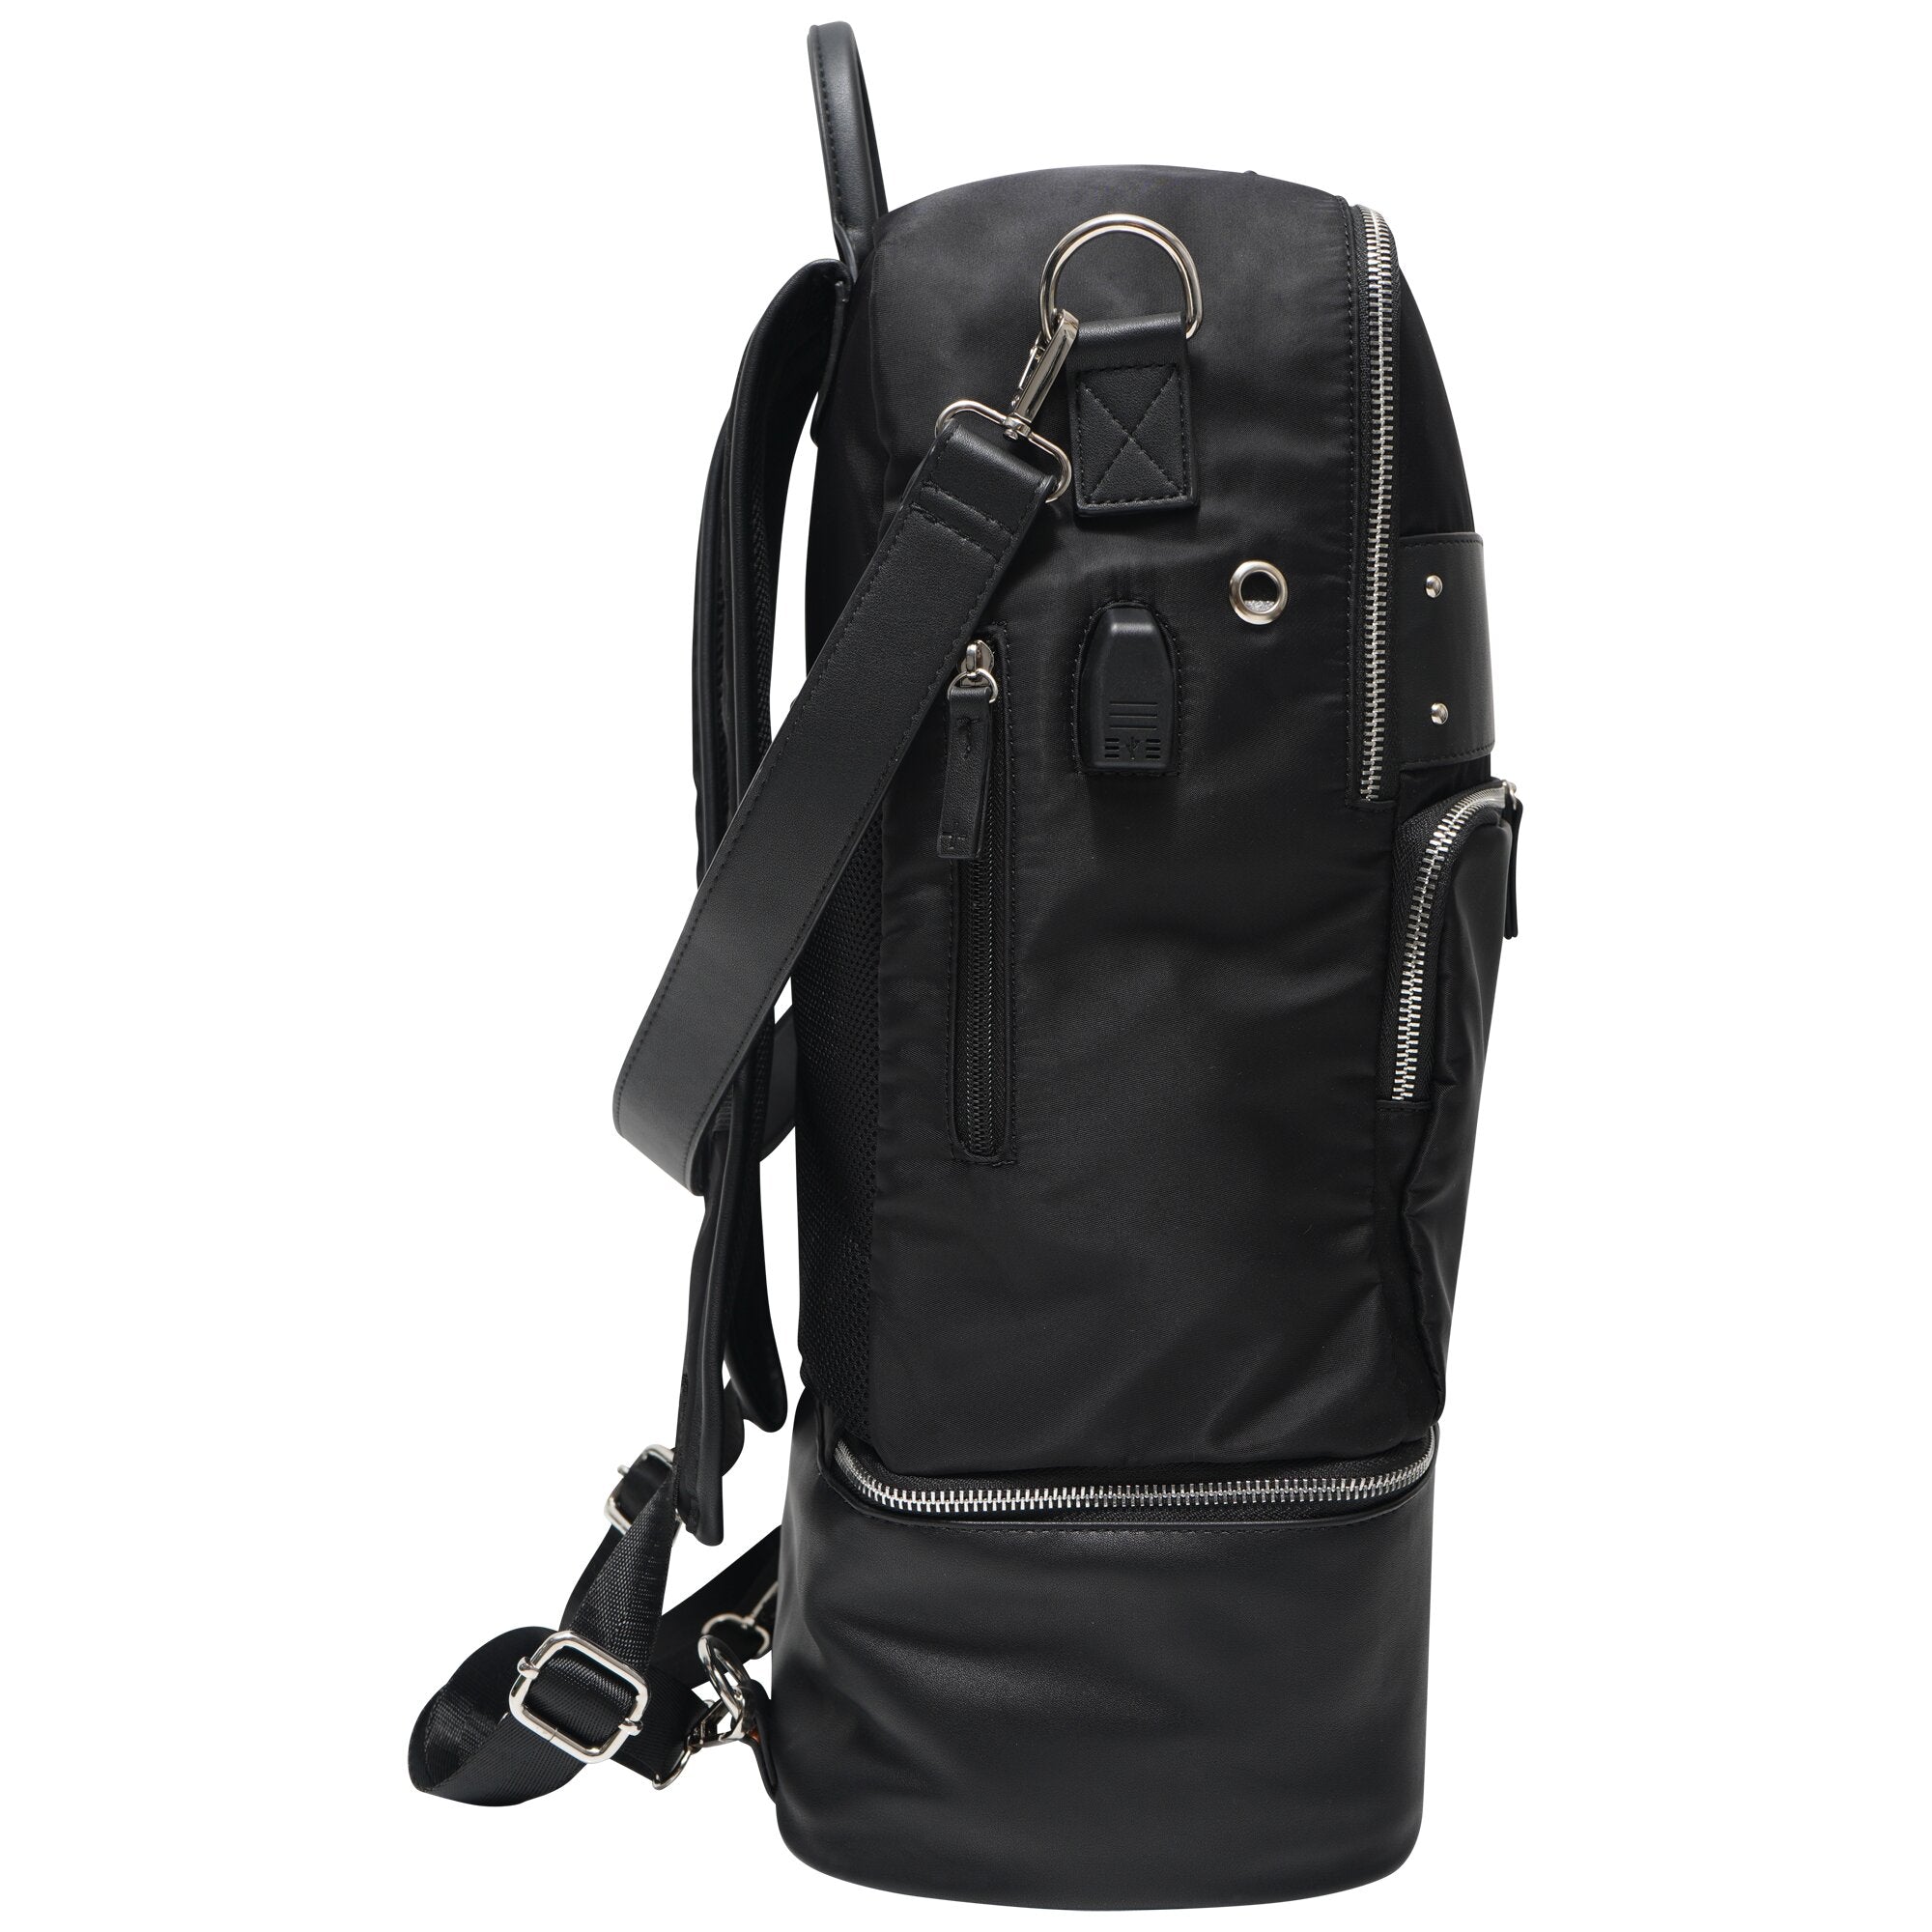 stylish backpack for women laptop bag